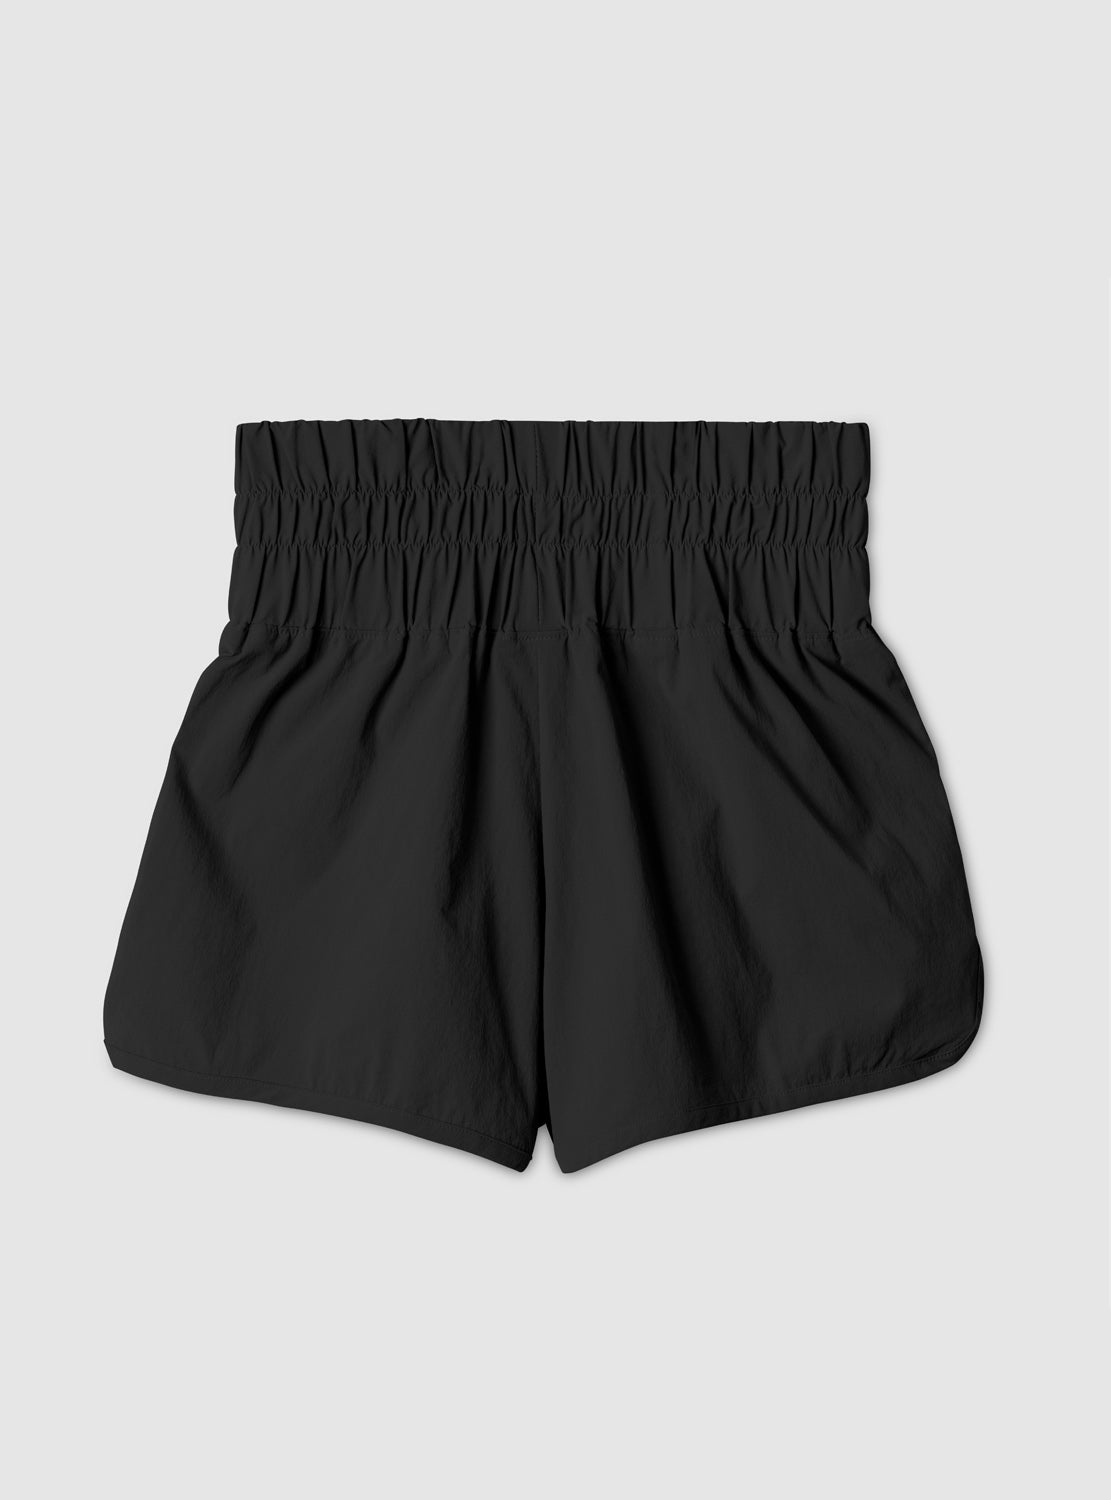 betty designs BDlab sportwear apparel for women adventure shorts